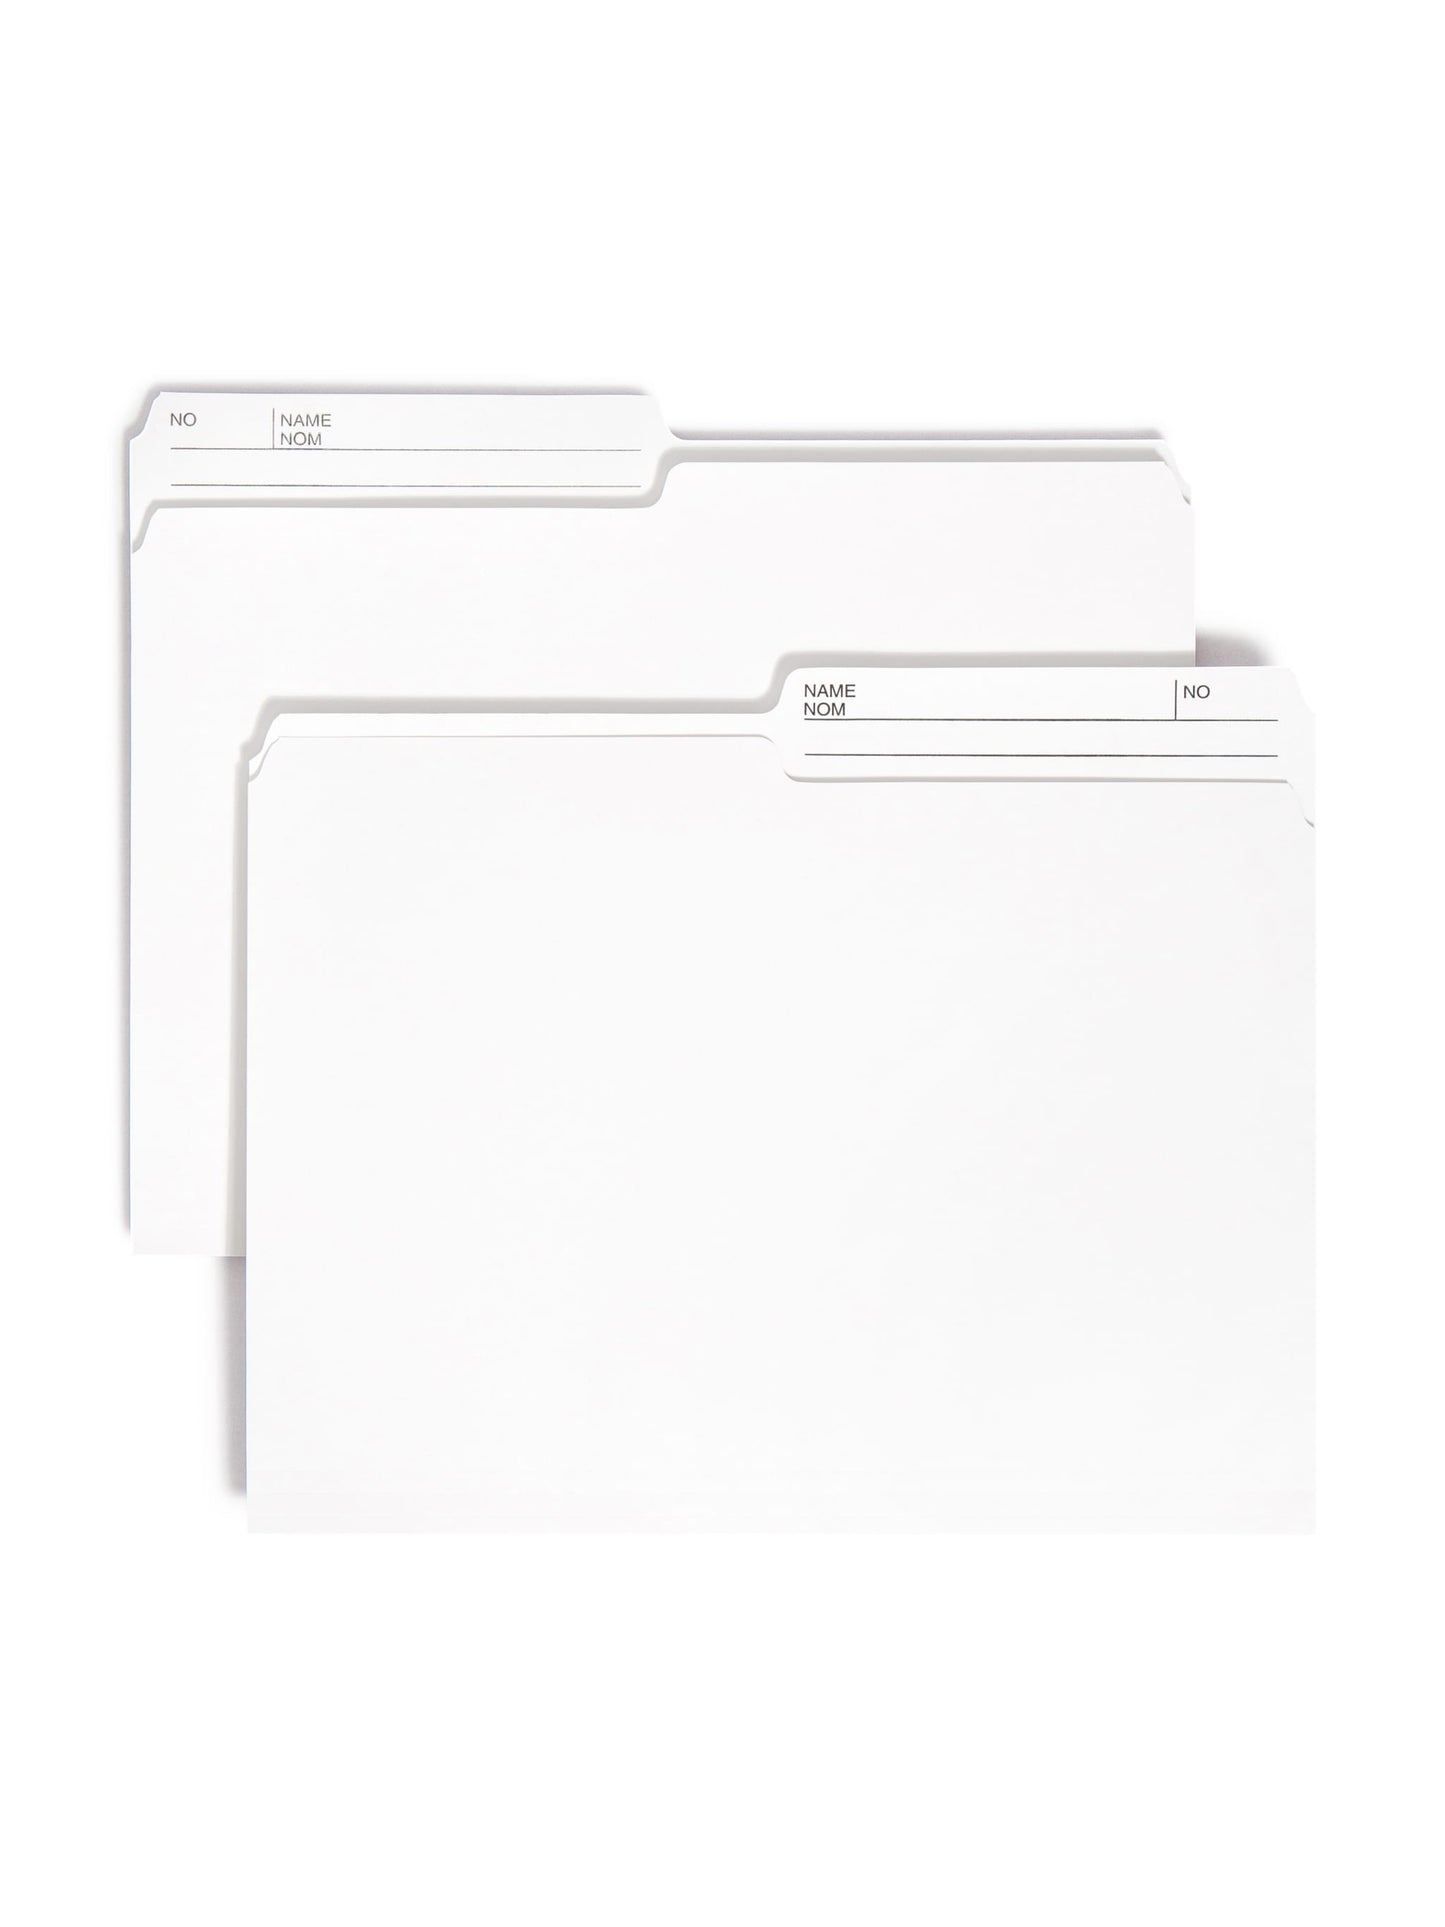 Reversible Printed Tab File Folders, 1/2-Cut Tab, 9 1/2 pt., Ivory Color, Letter Size, Set of 100, 086486101462